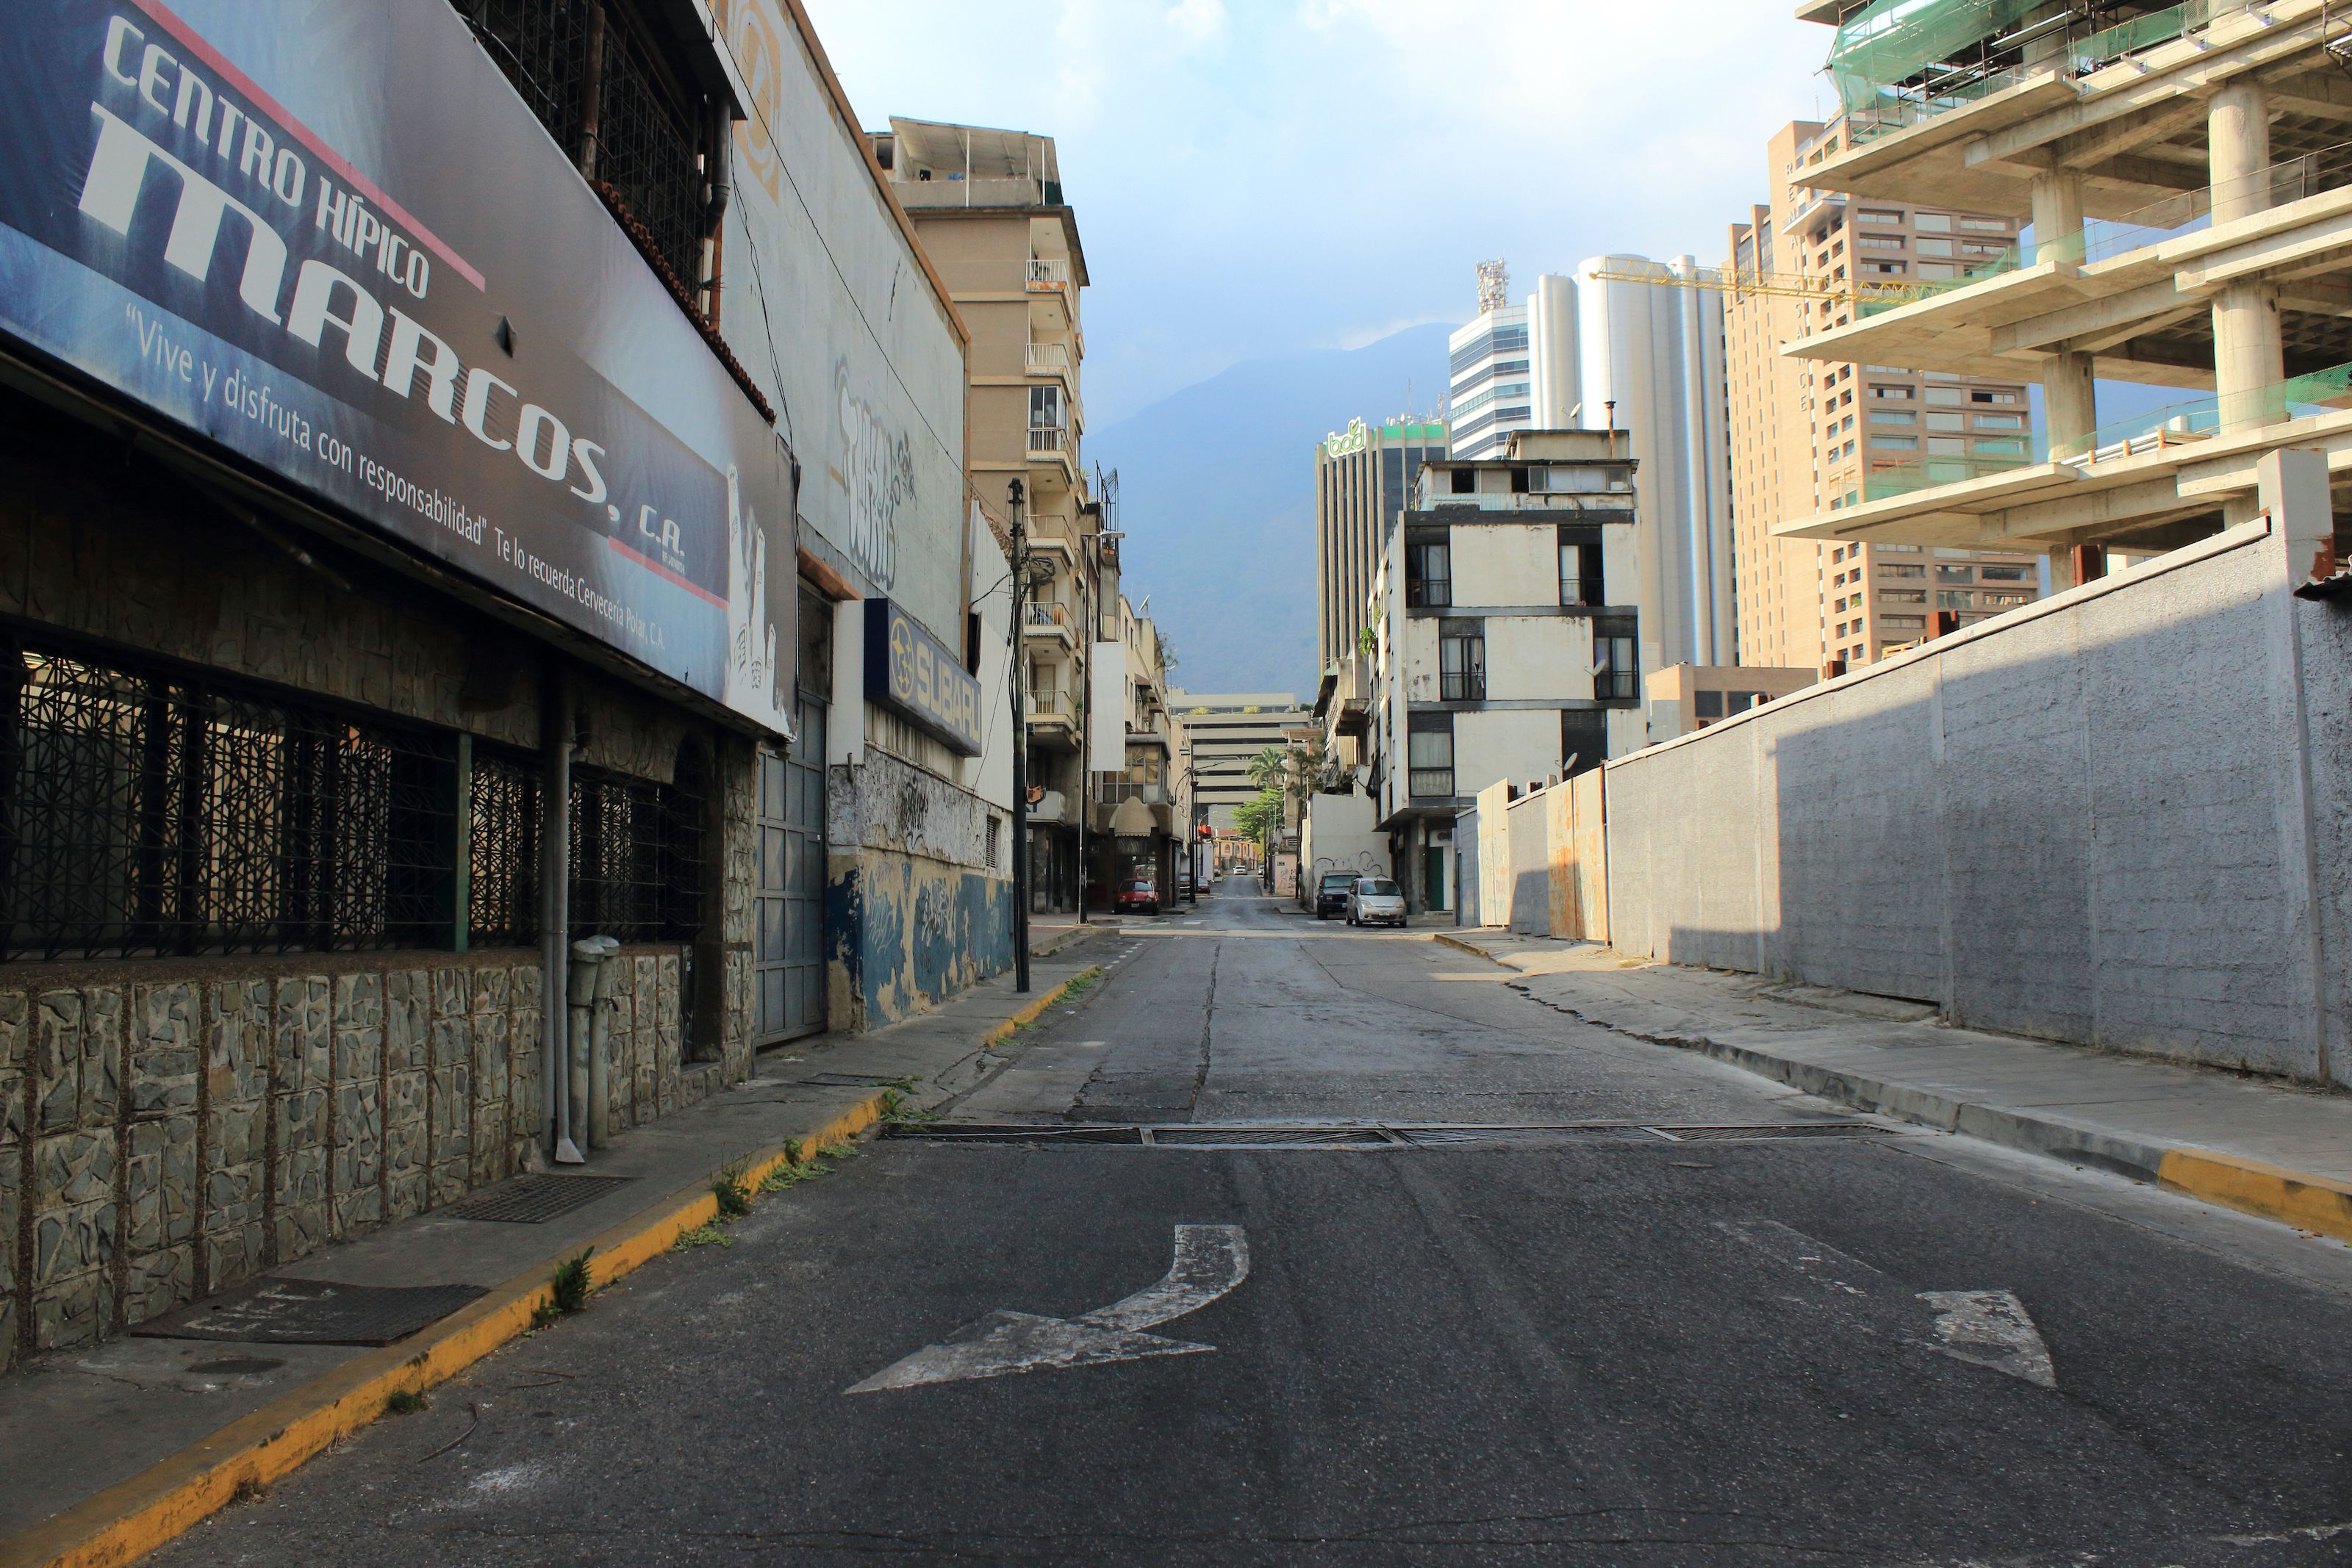 The main streets in Caracas, Venezuela, are empty during the COVID-19 lockdown. Image by Edgloris Marys. Venezuela, 2020.